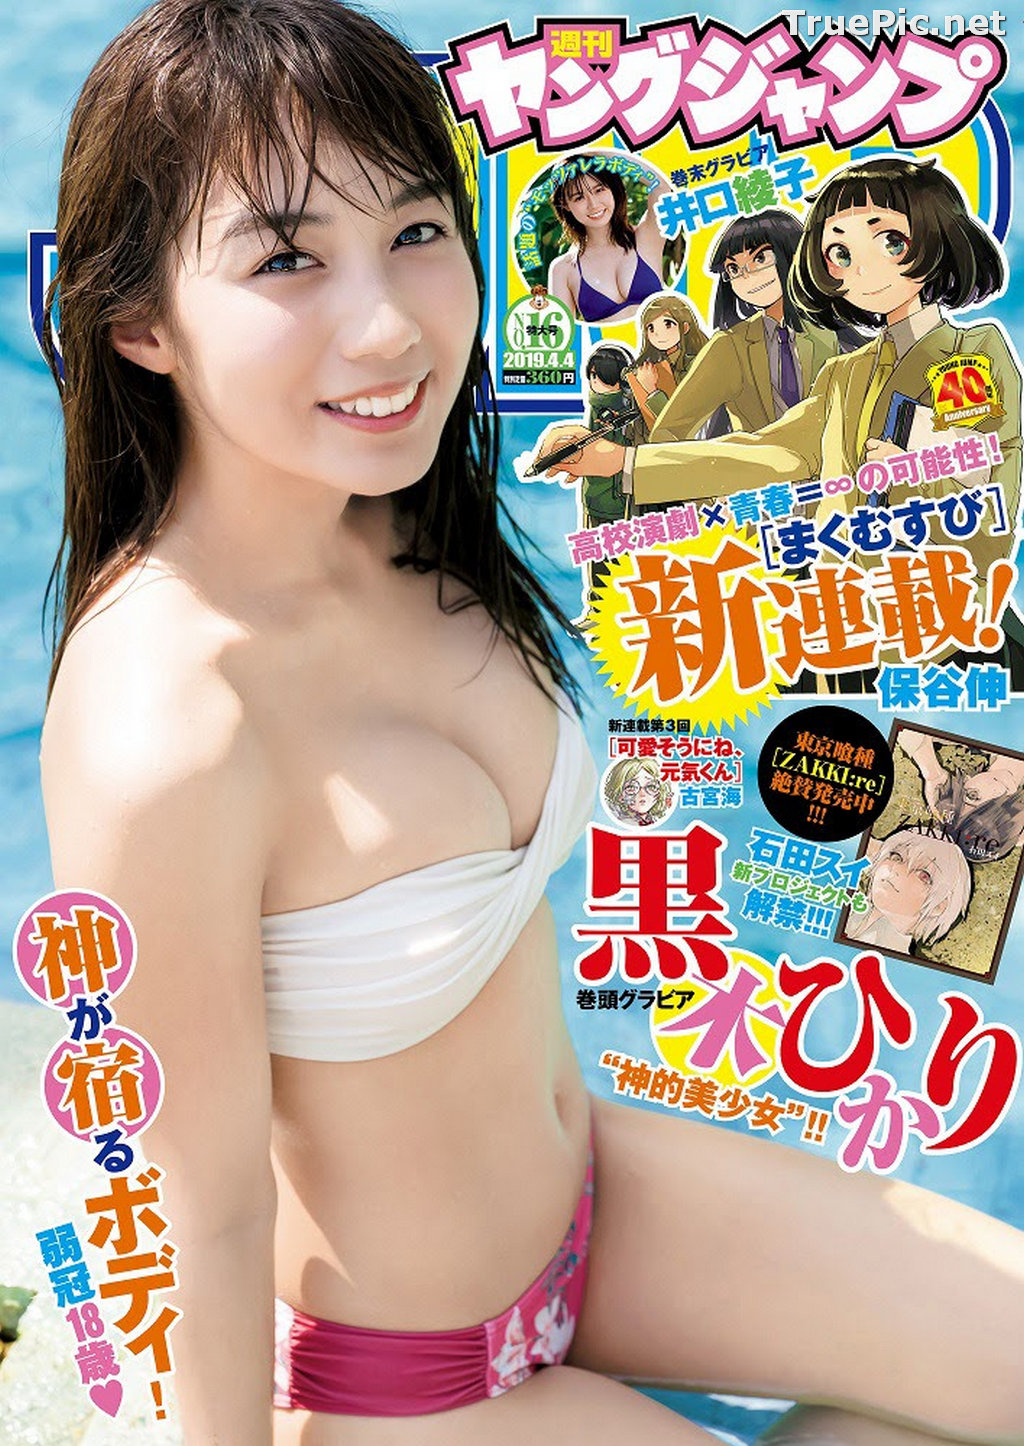 Image Japanese Actress and Model – Hikari Kuroki (黒木ひかり) – Sexy Picture Collection 2021 - TruePic.net - Picture-212